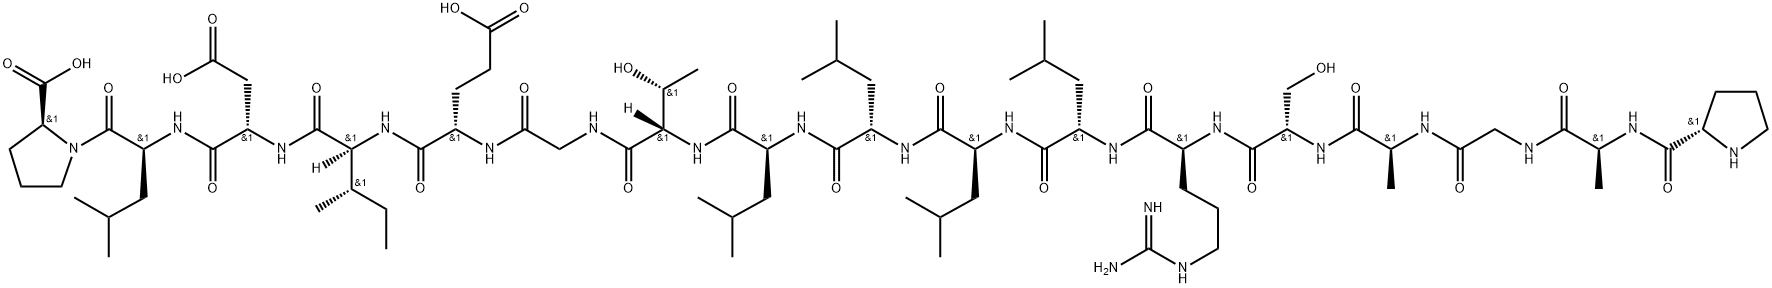 AGA-(C8R) HNG17, Humanin derivative Structure